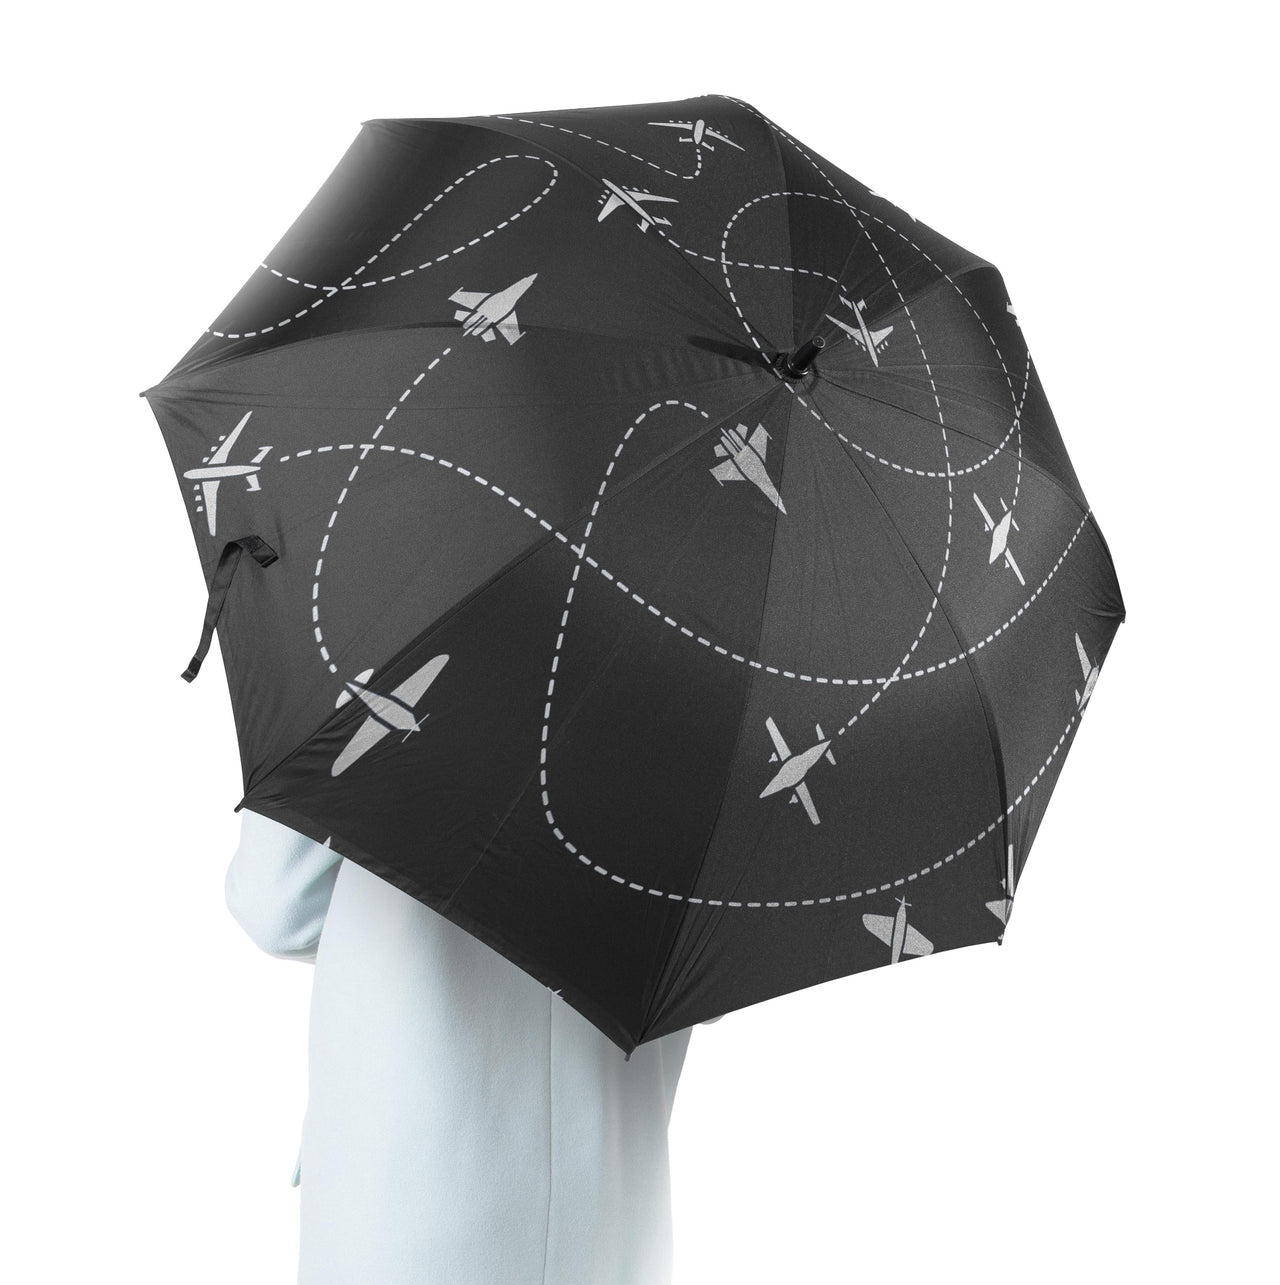 Travel The World By Plane (Black) Designed Umbrella